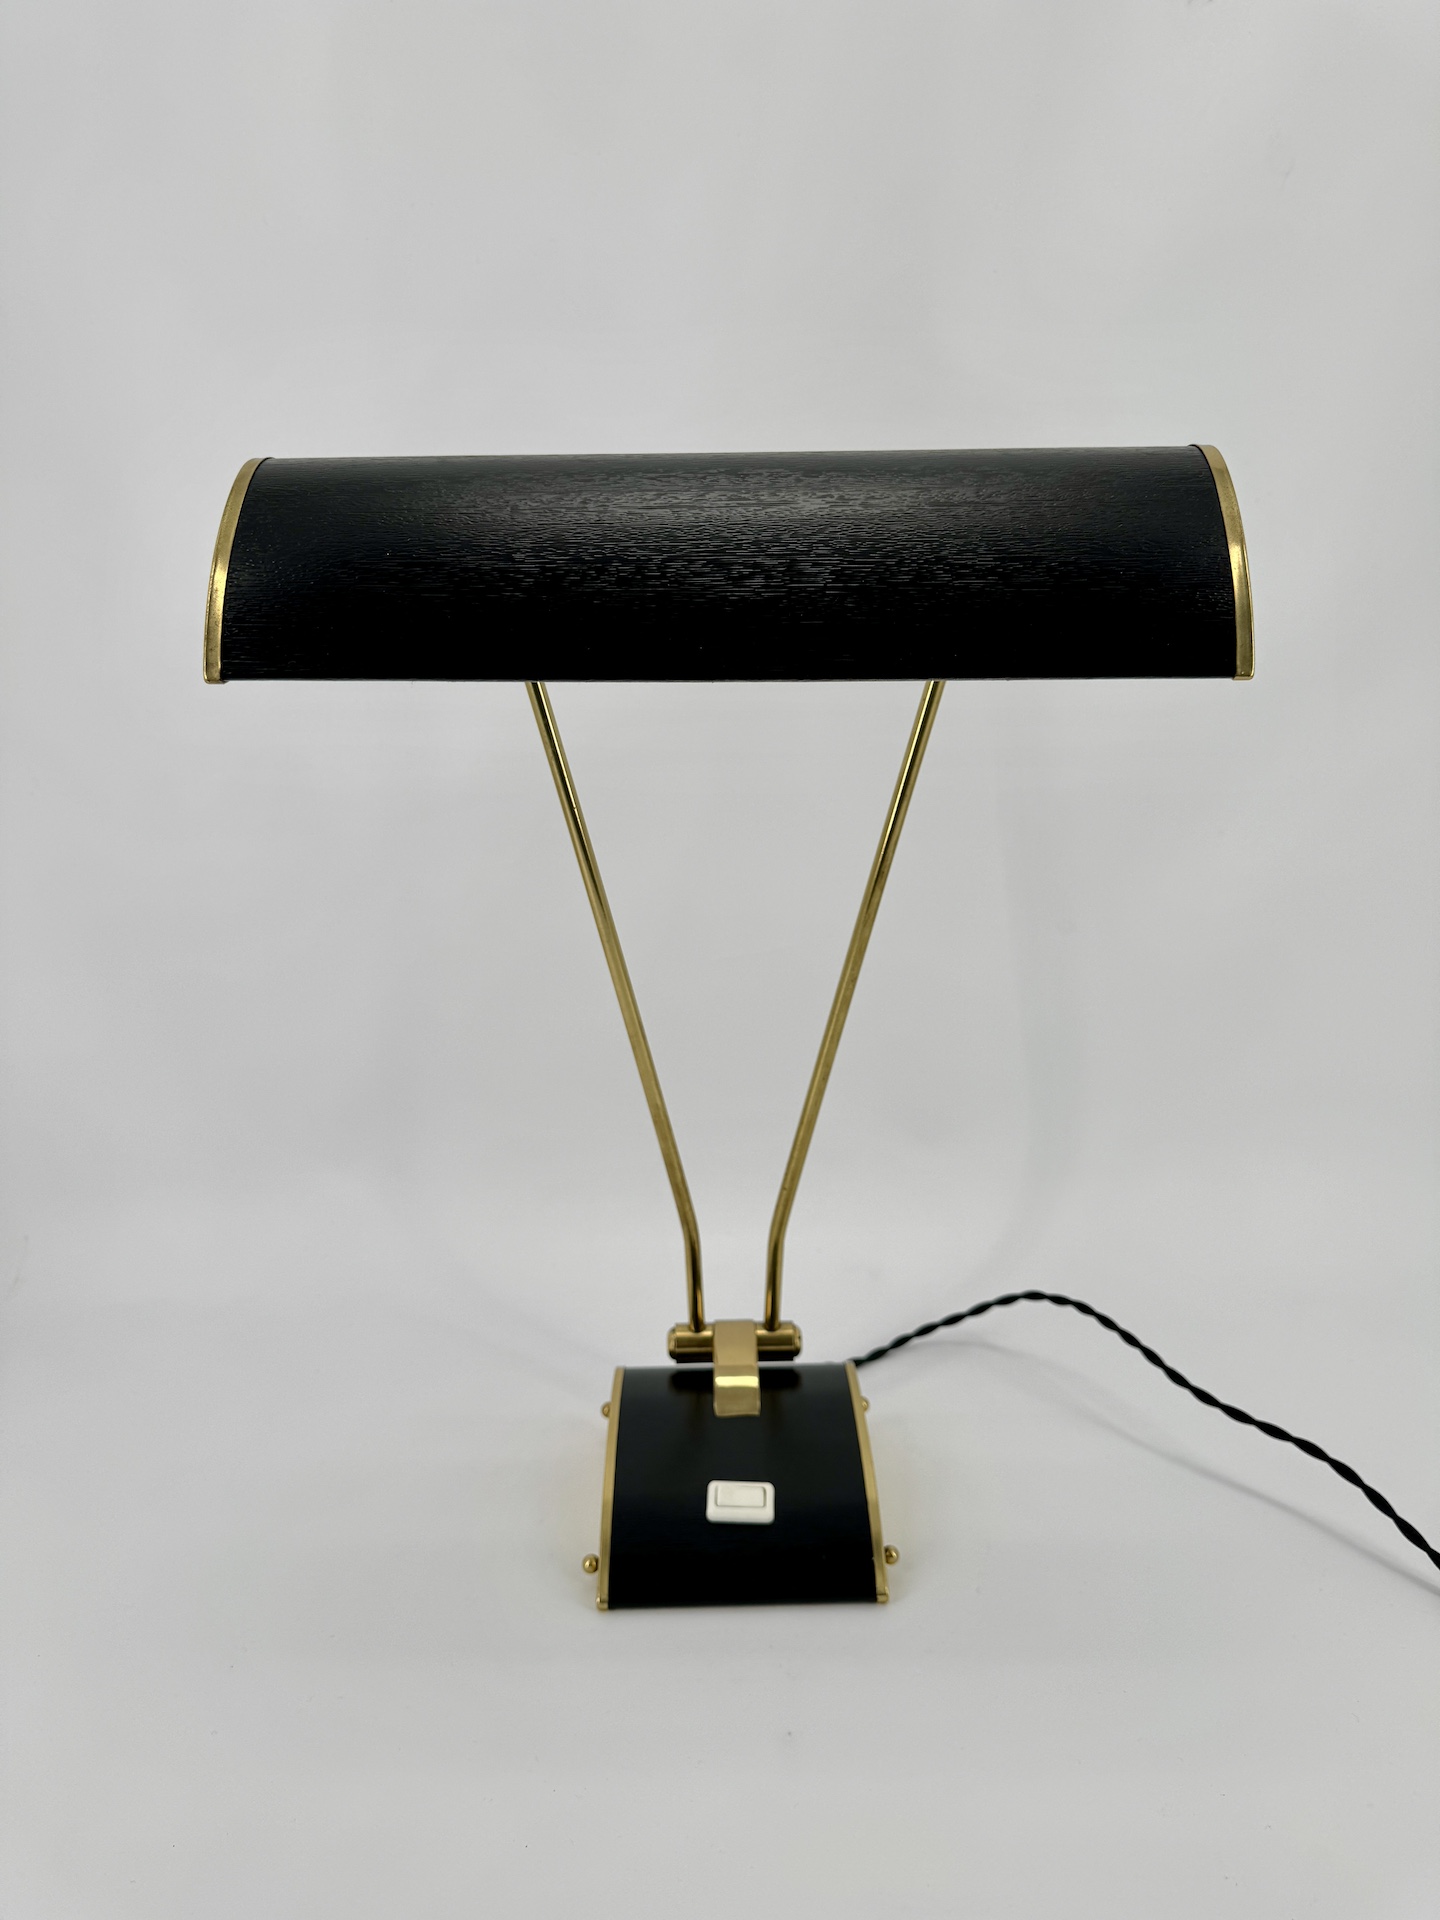 1 JUMO Lamp black and brass